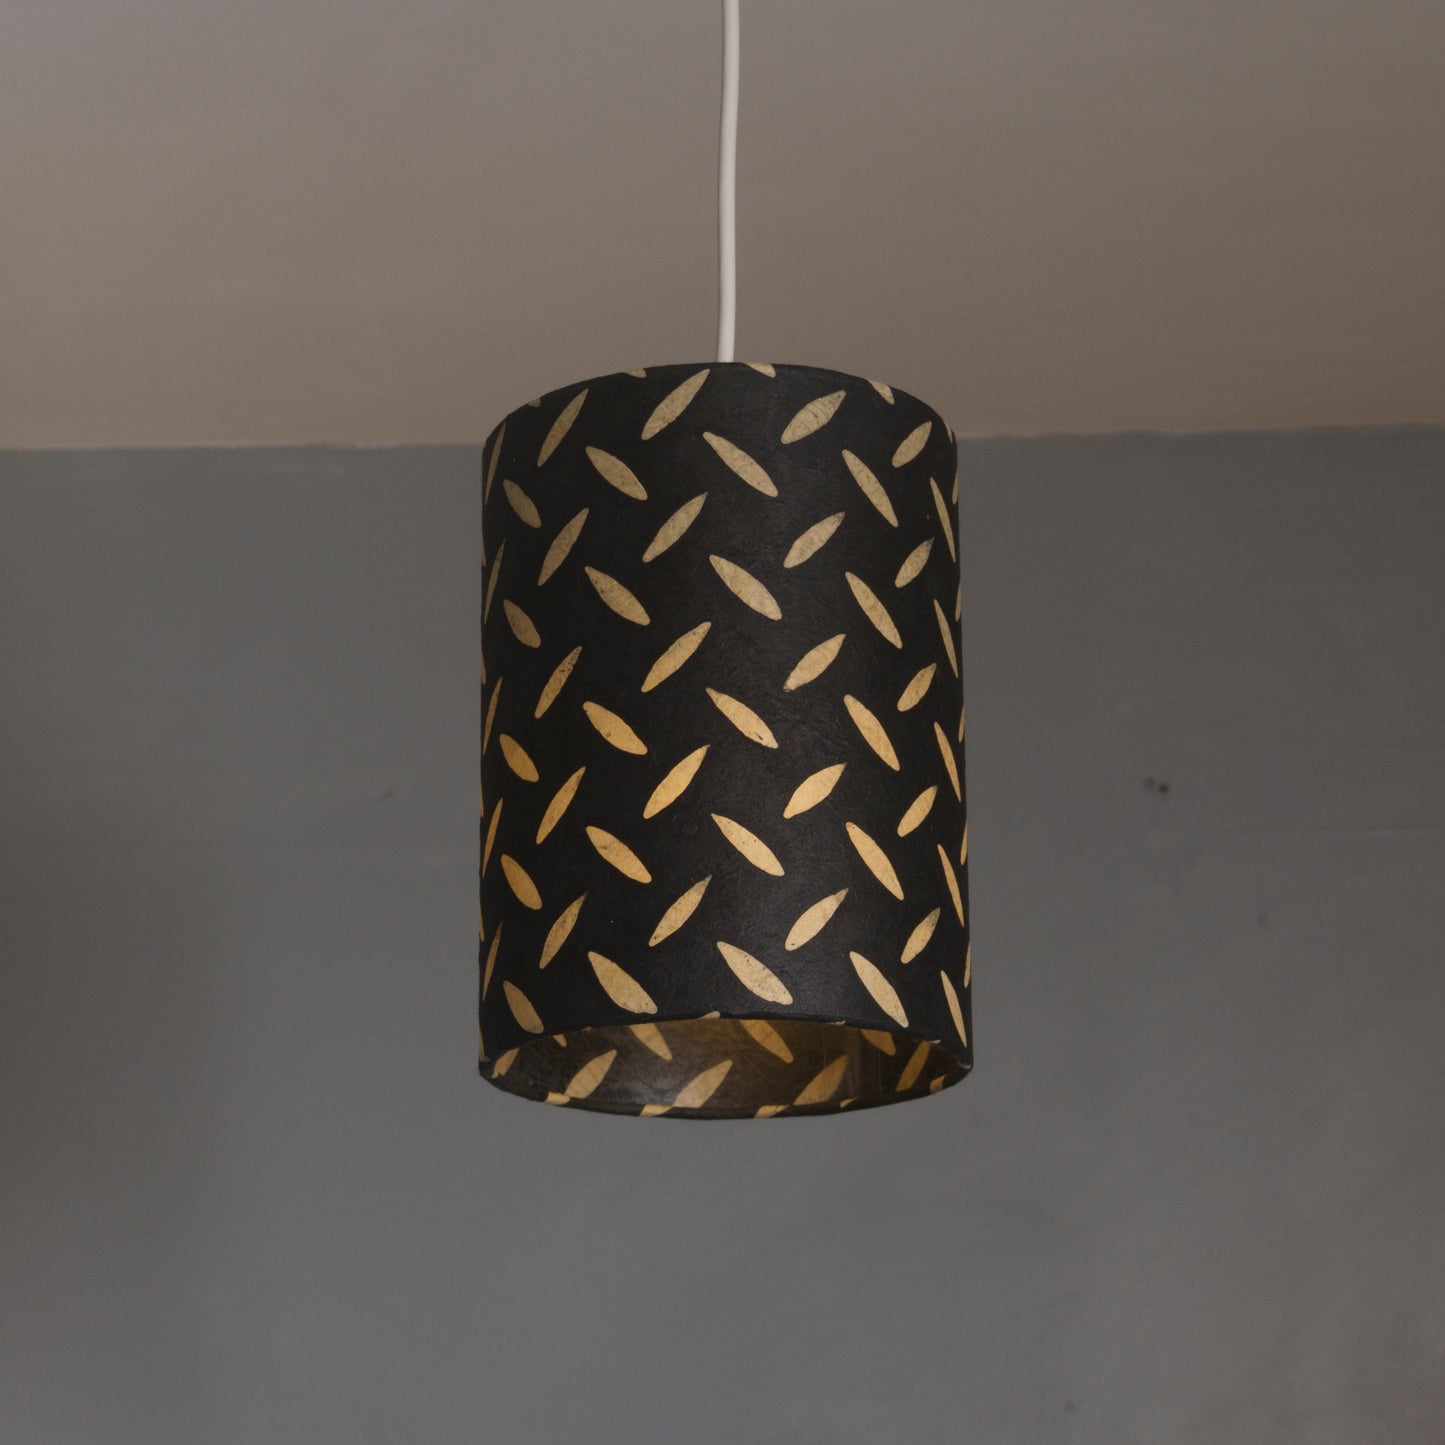 3 Tier Lamp Shade - P11 - Batik Tread Plate Black, 40cm x 20cm, 30cm x 17.5cm & 20cm x 15cm